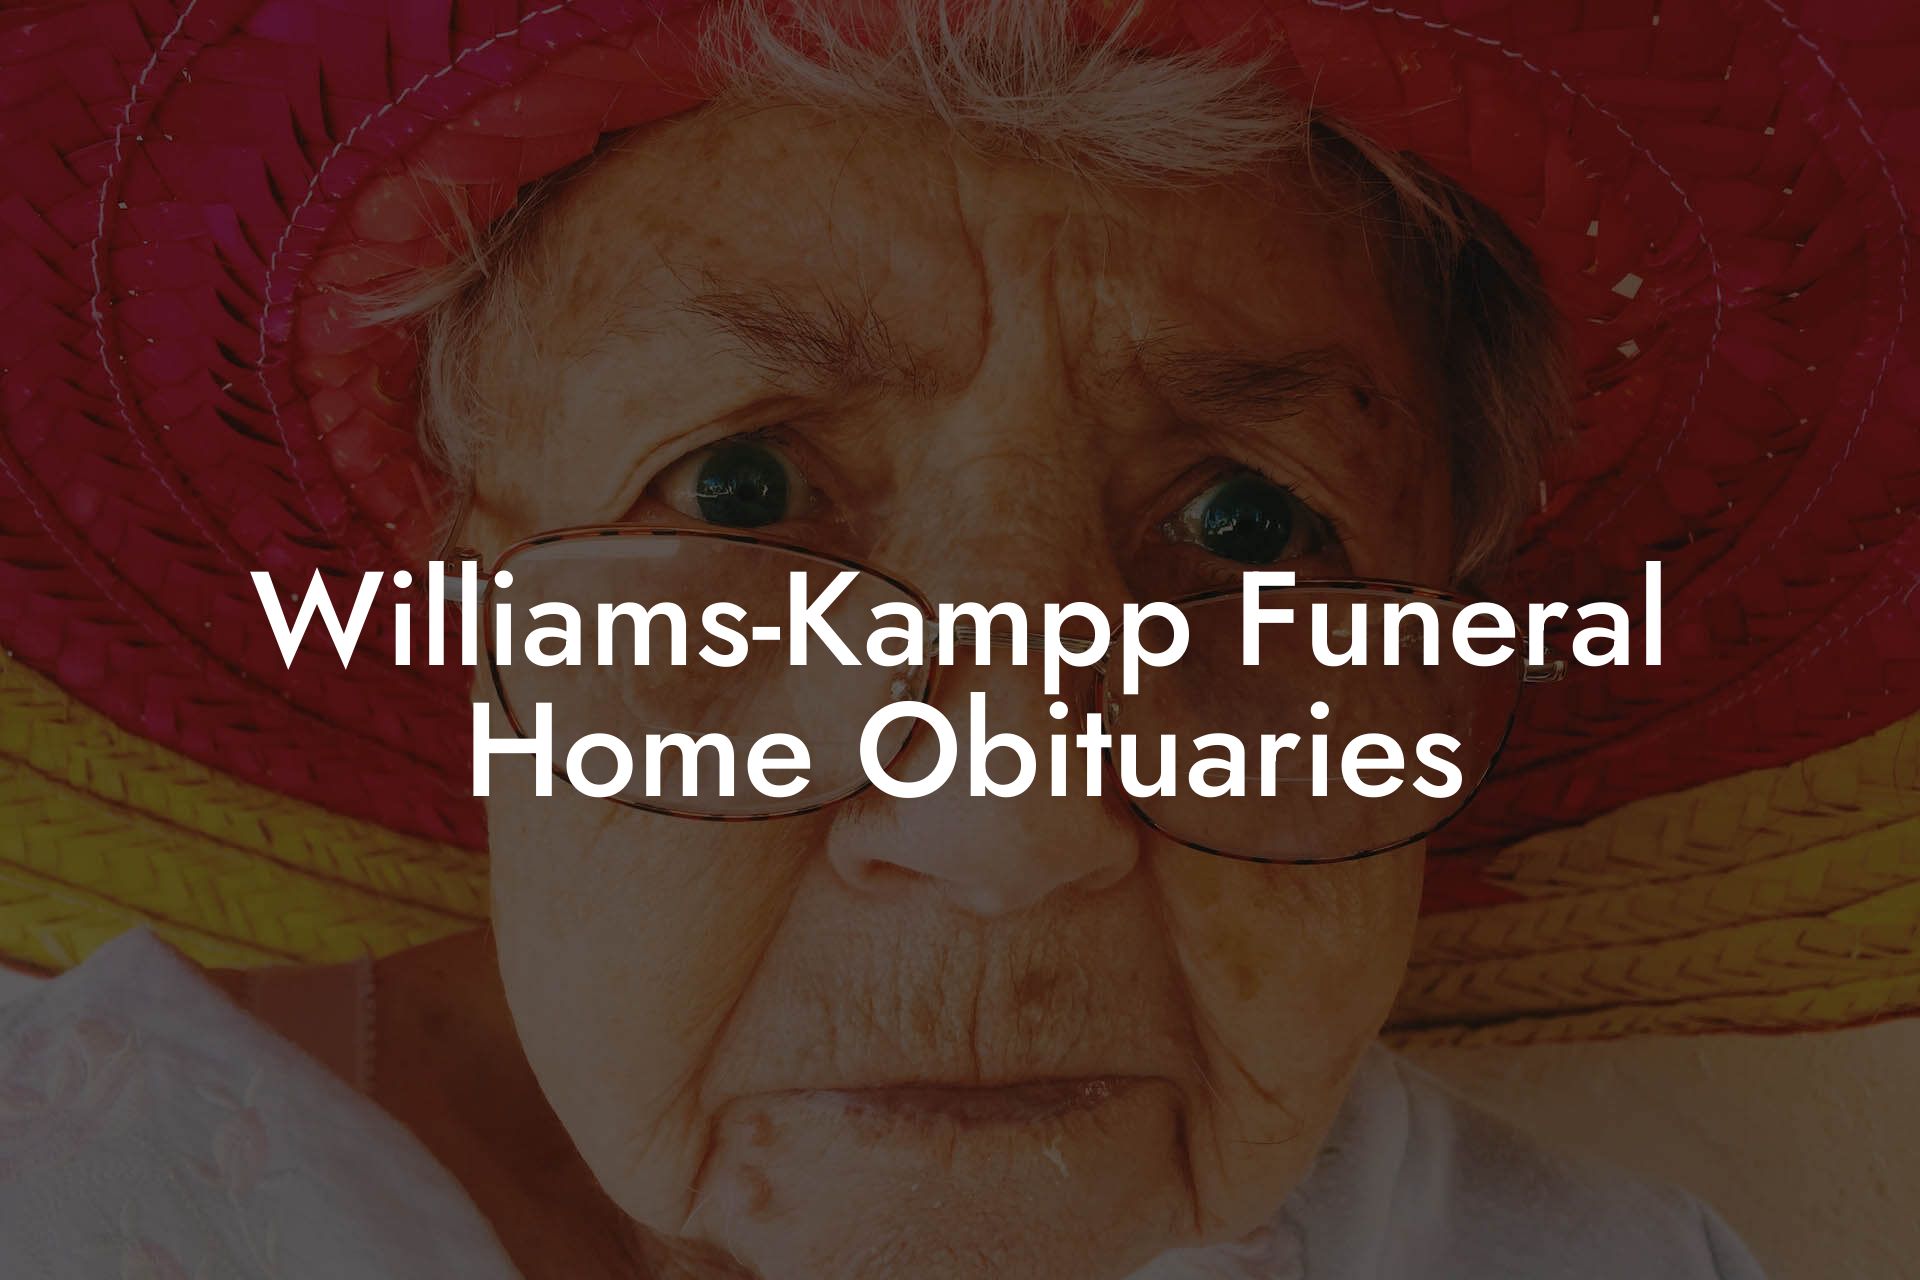 Williams-Kampp Funeral Home Obituaries